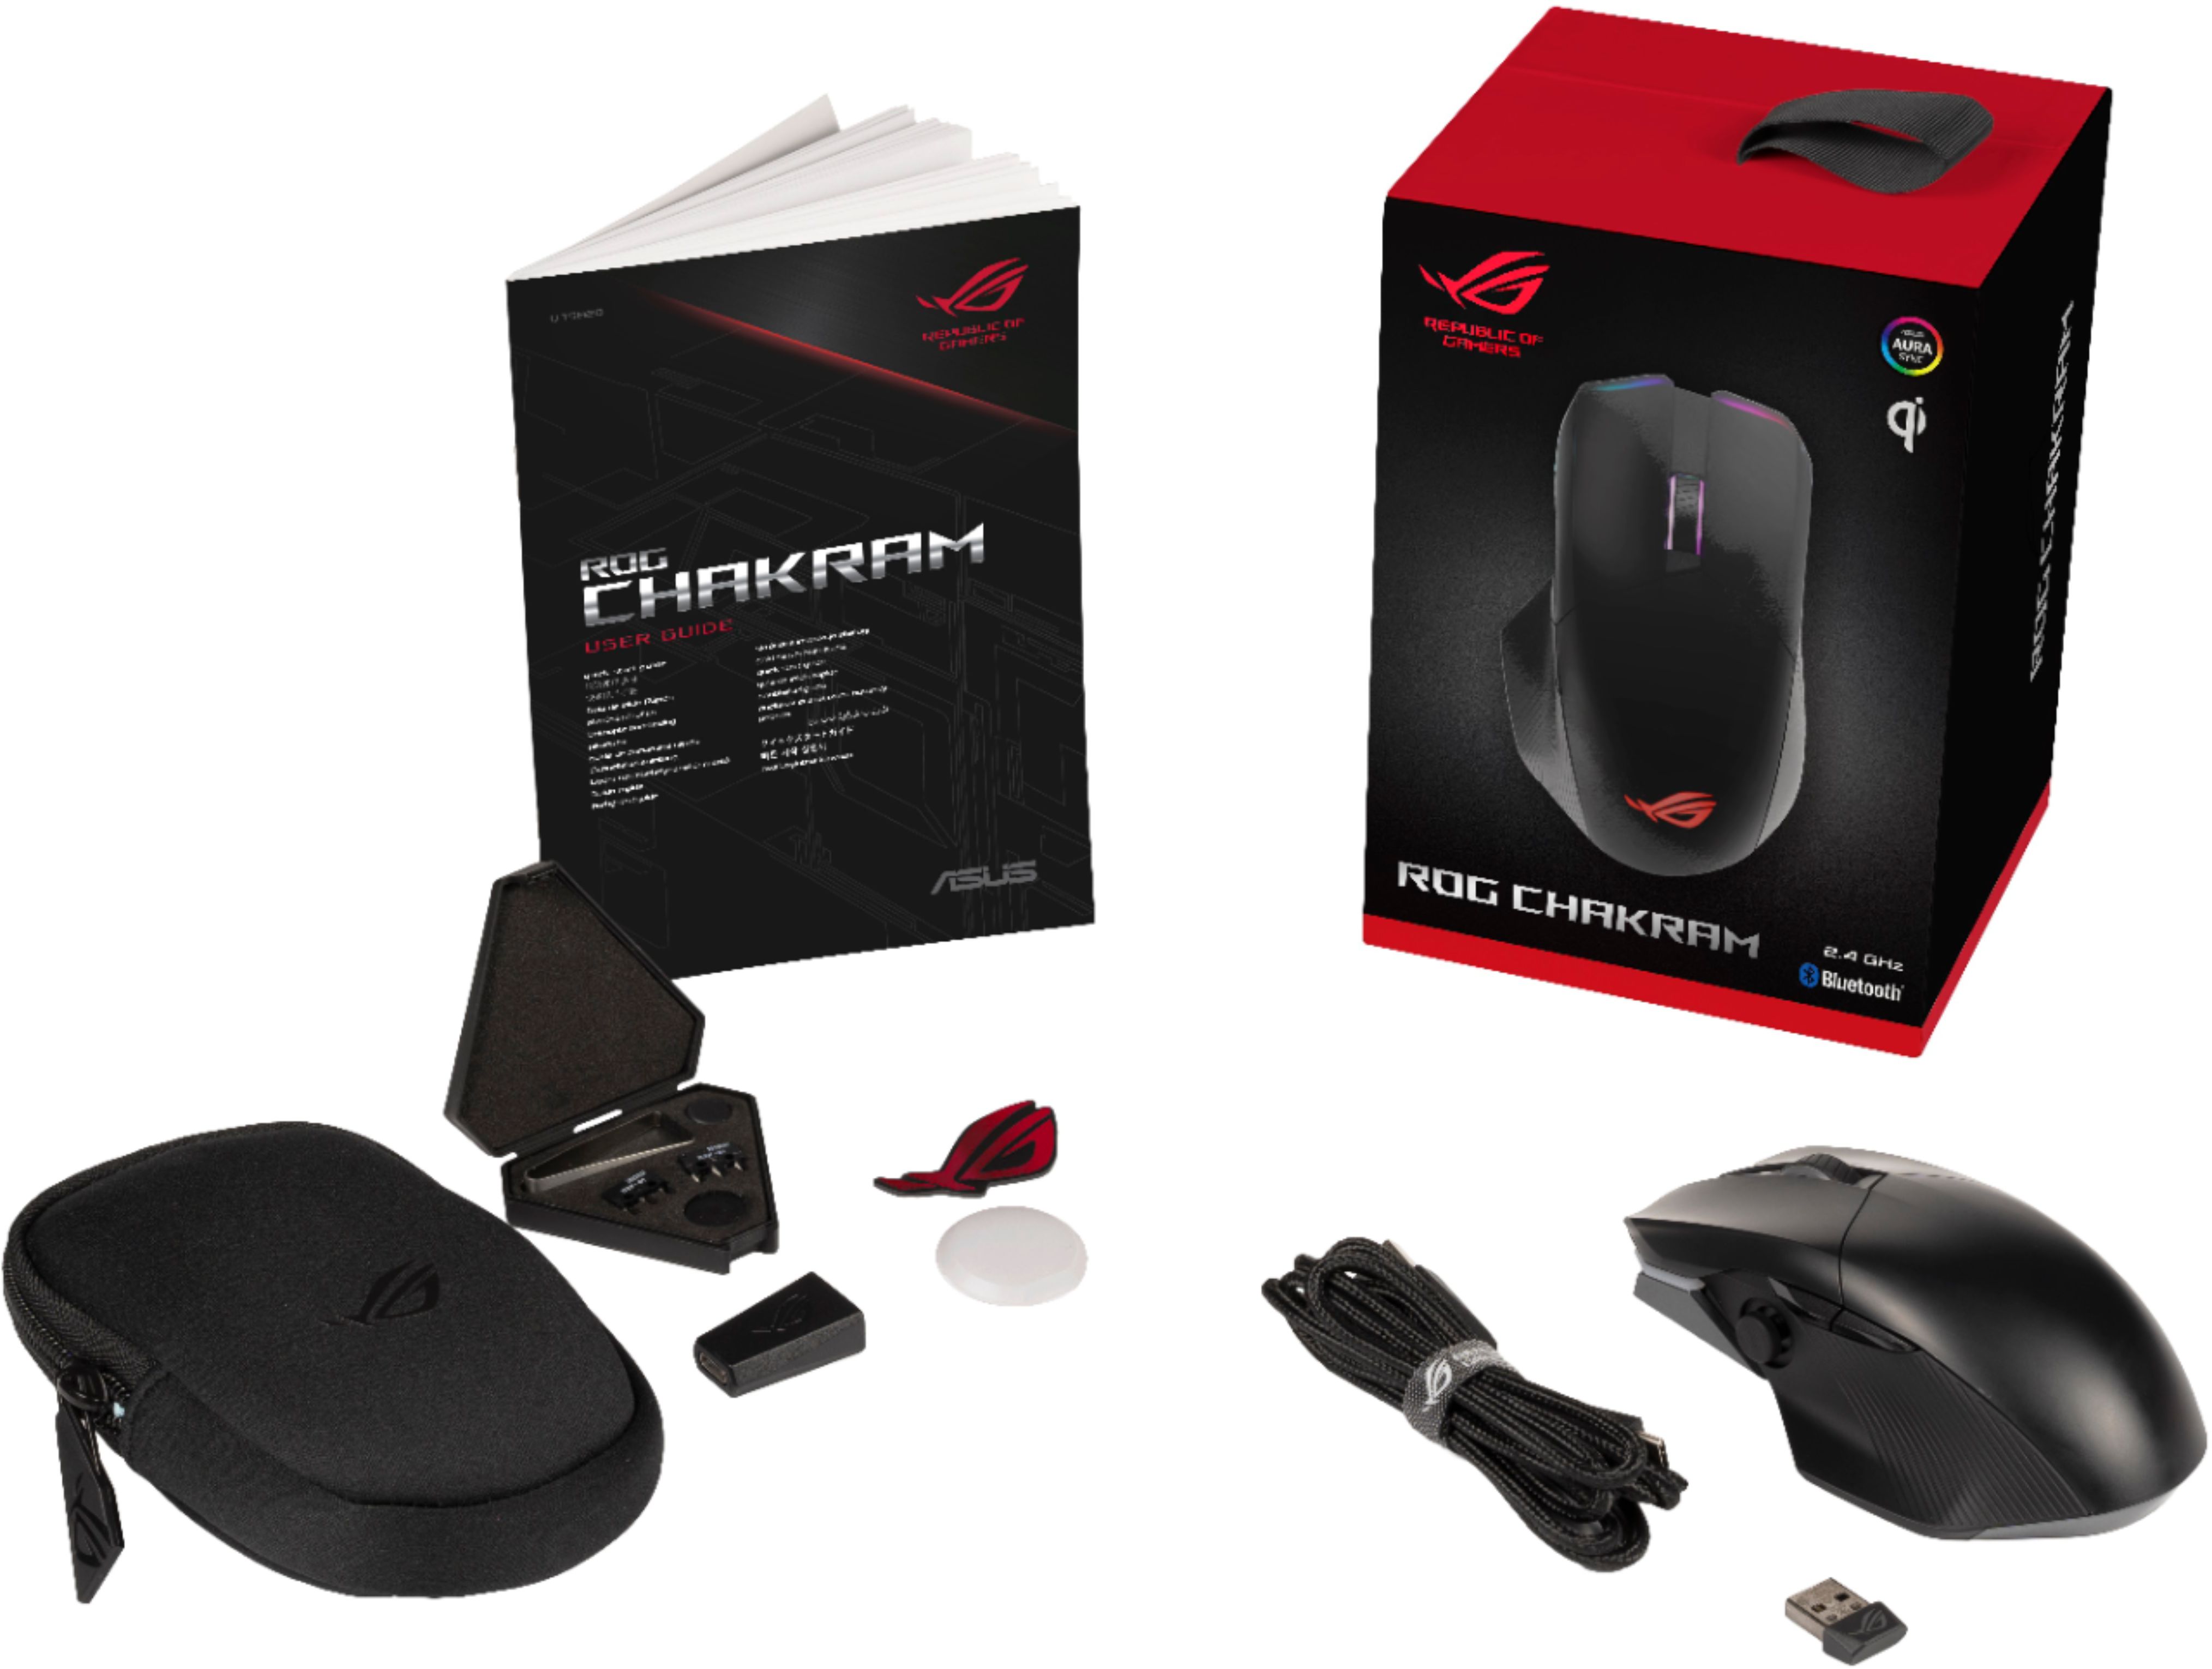 Asus Rog Chakram Bluetooth Optical Gaming Mouse With Aura Sync Lighting Translucent Black Rog Chakram Best Buy